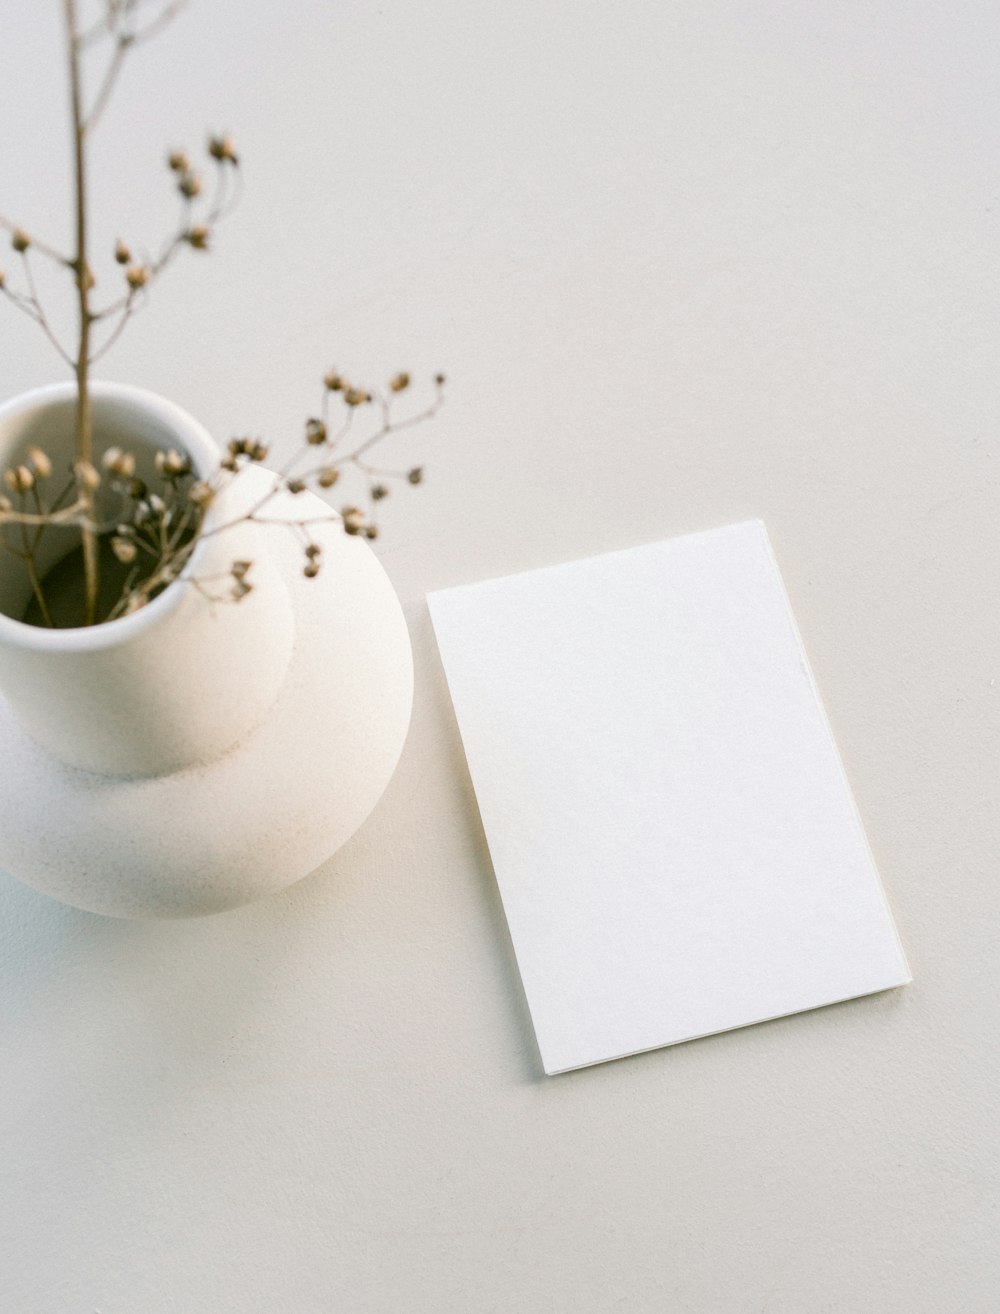 un vaso bianco con una pianta accanto a una carta vuota